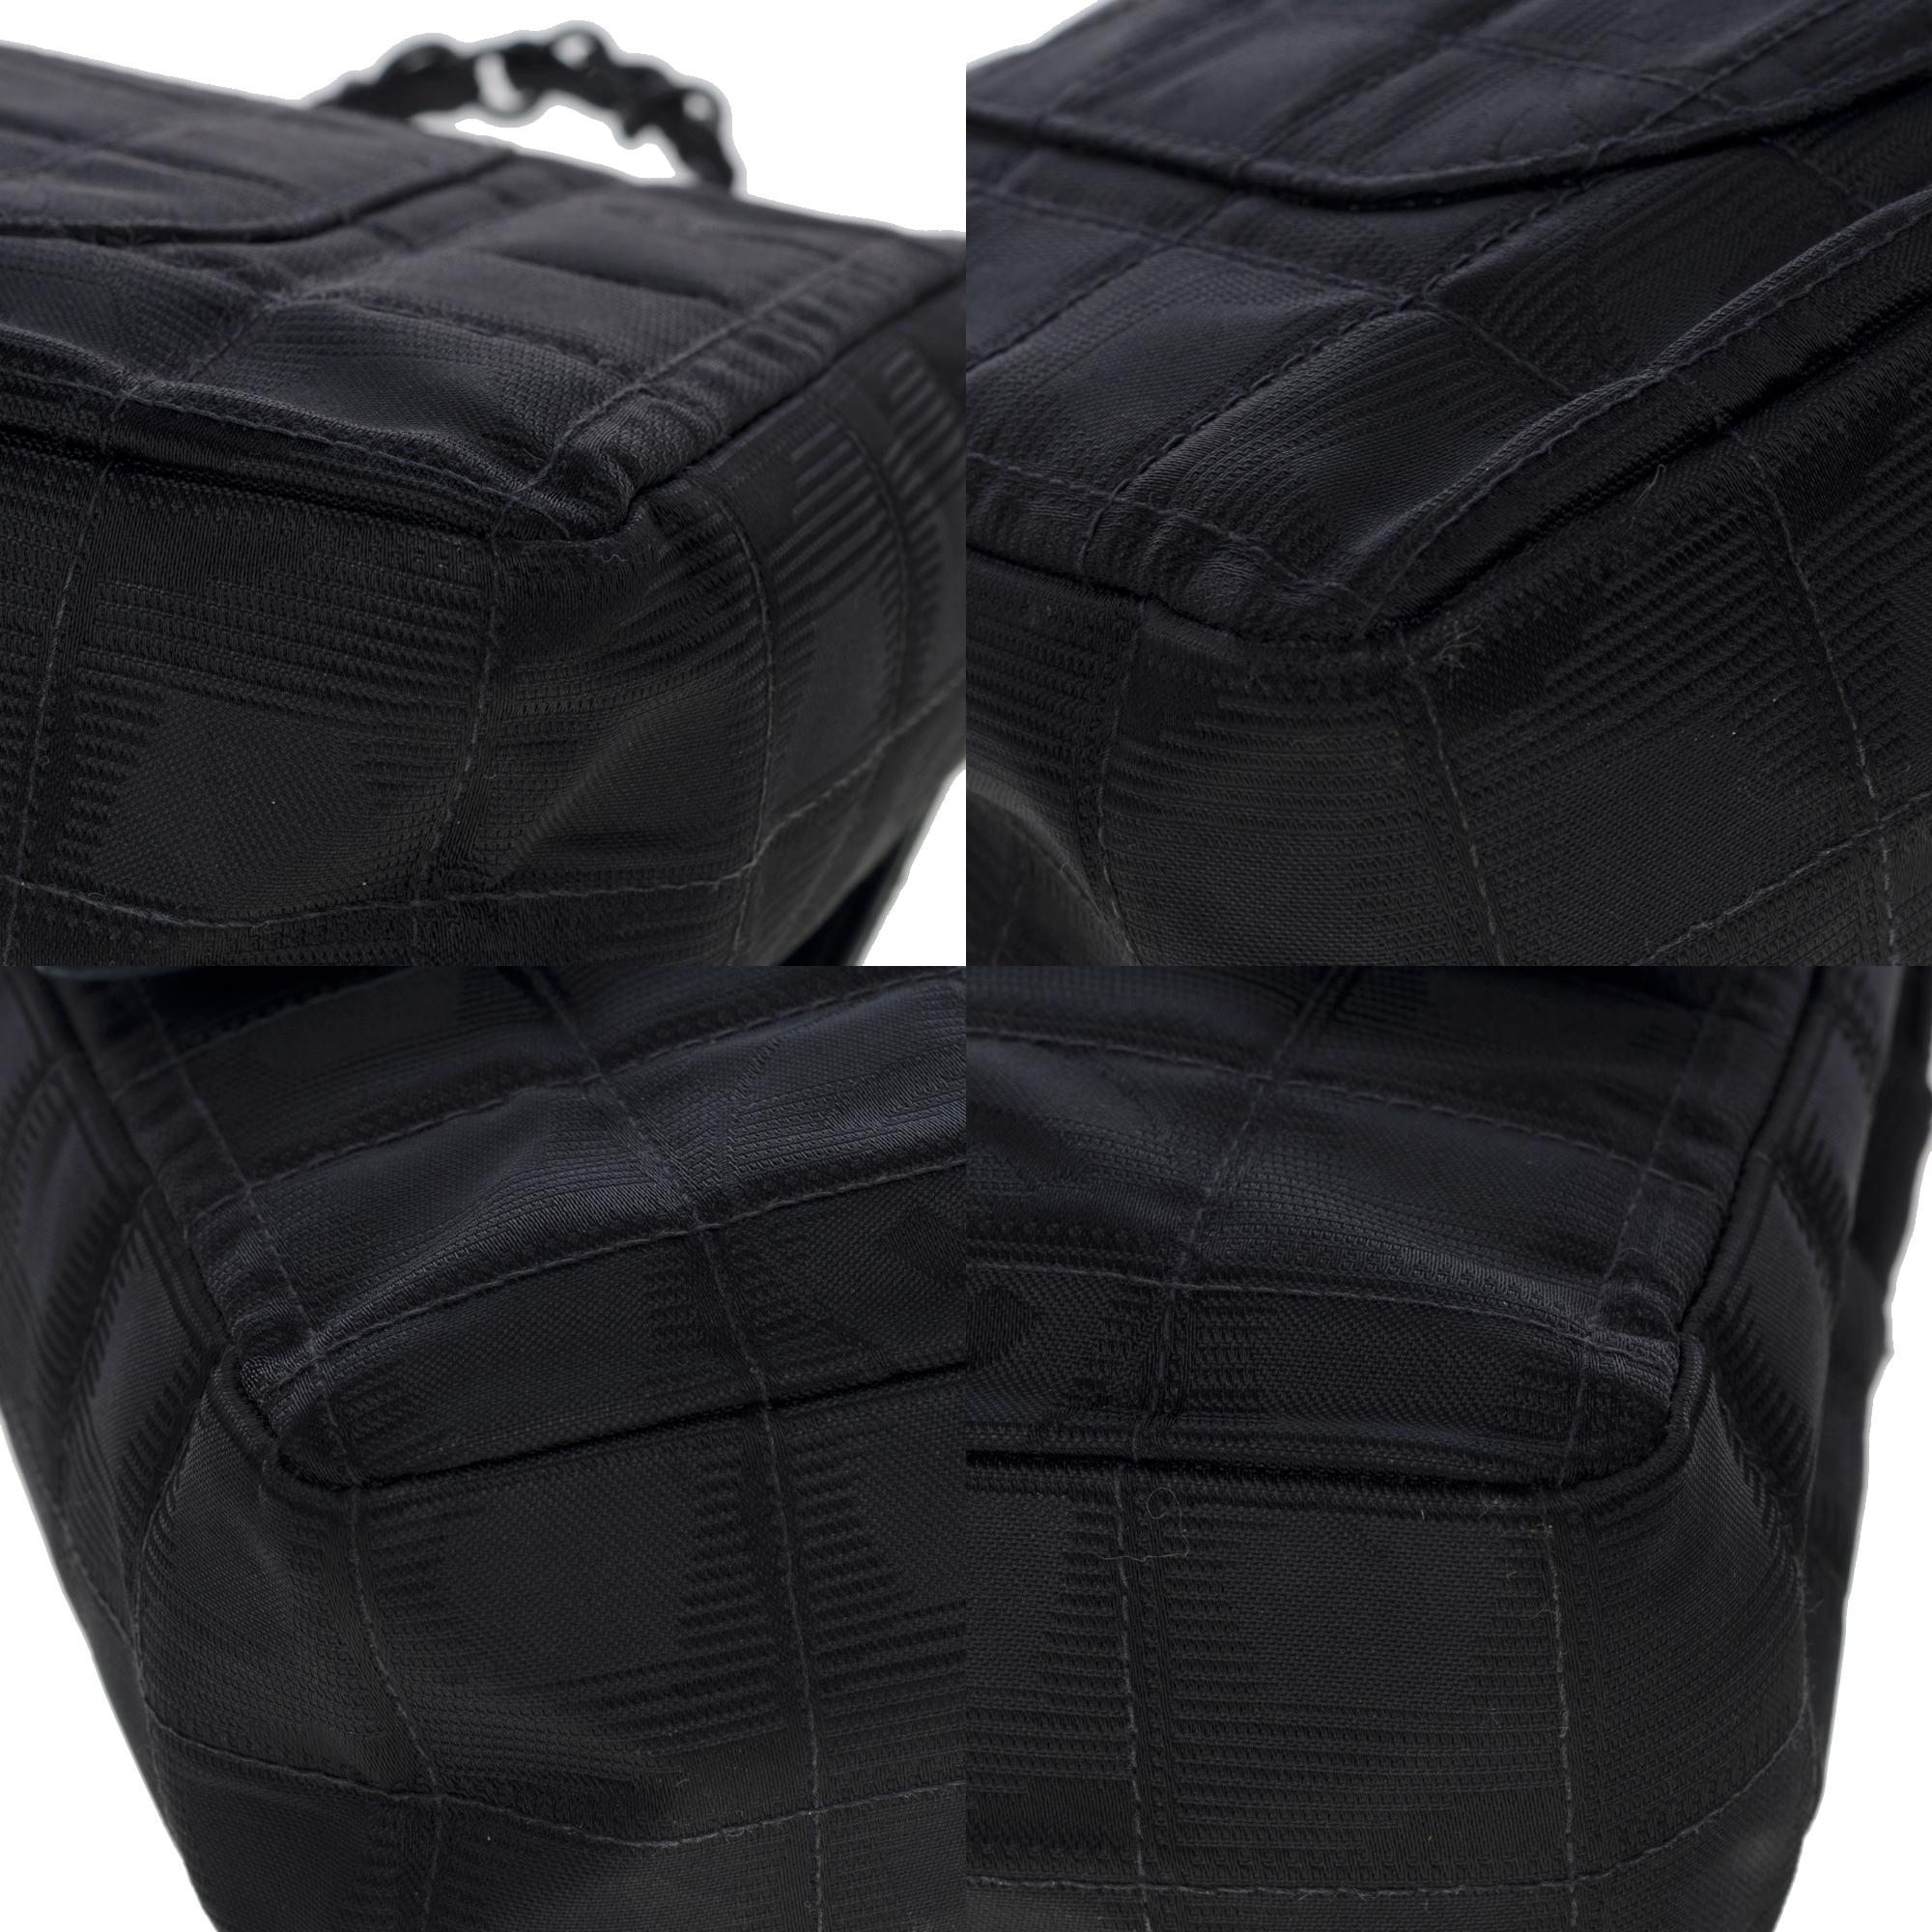 Chanel Timeless/Classic Travel Line flap bag in black nylon, black hardware 4